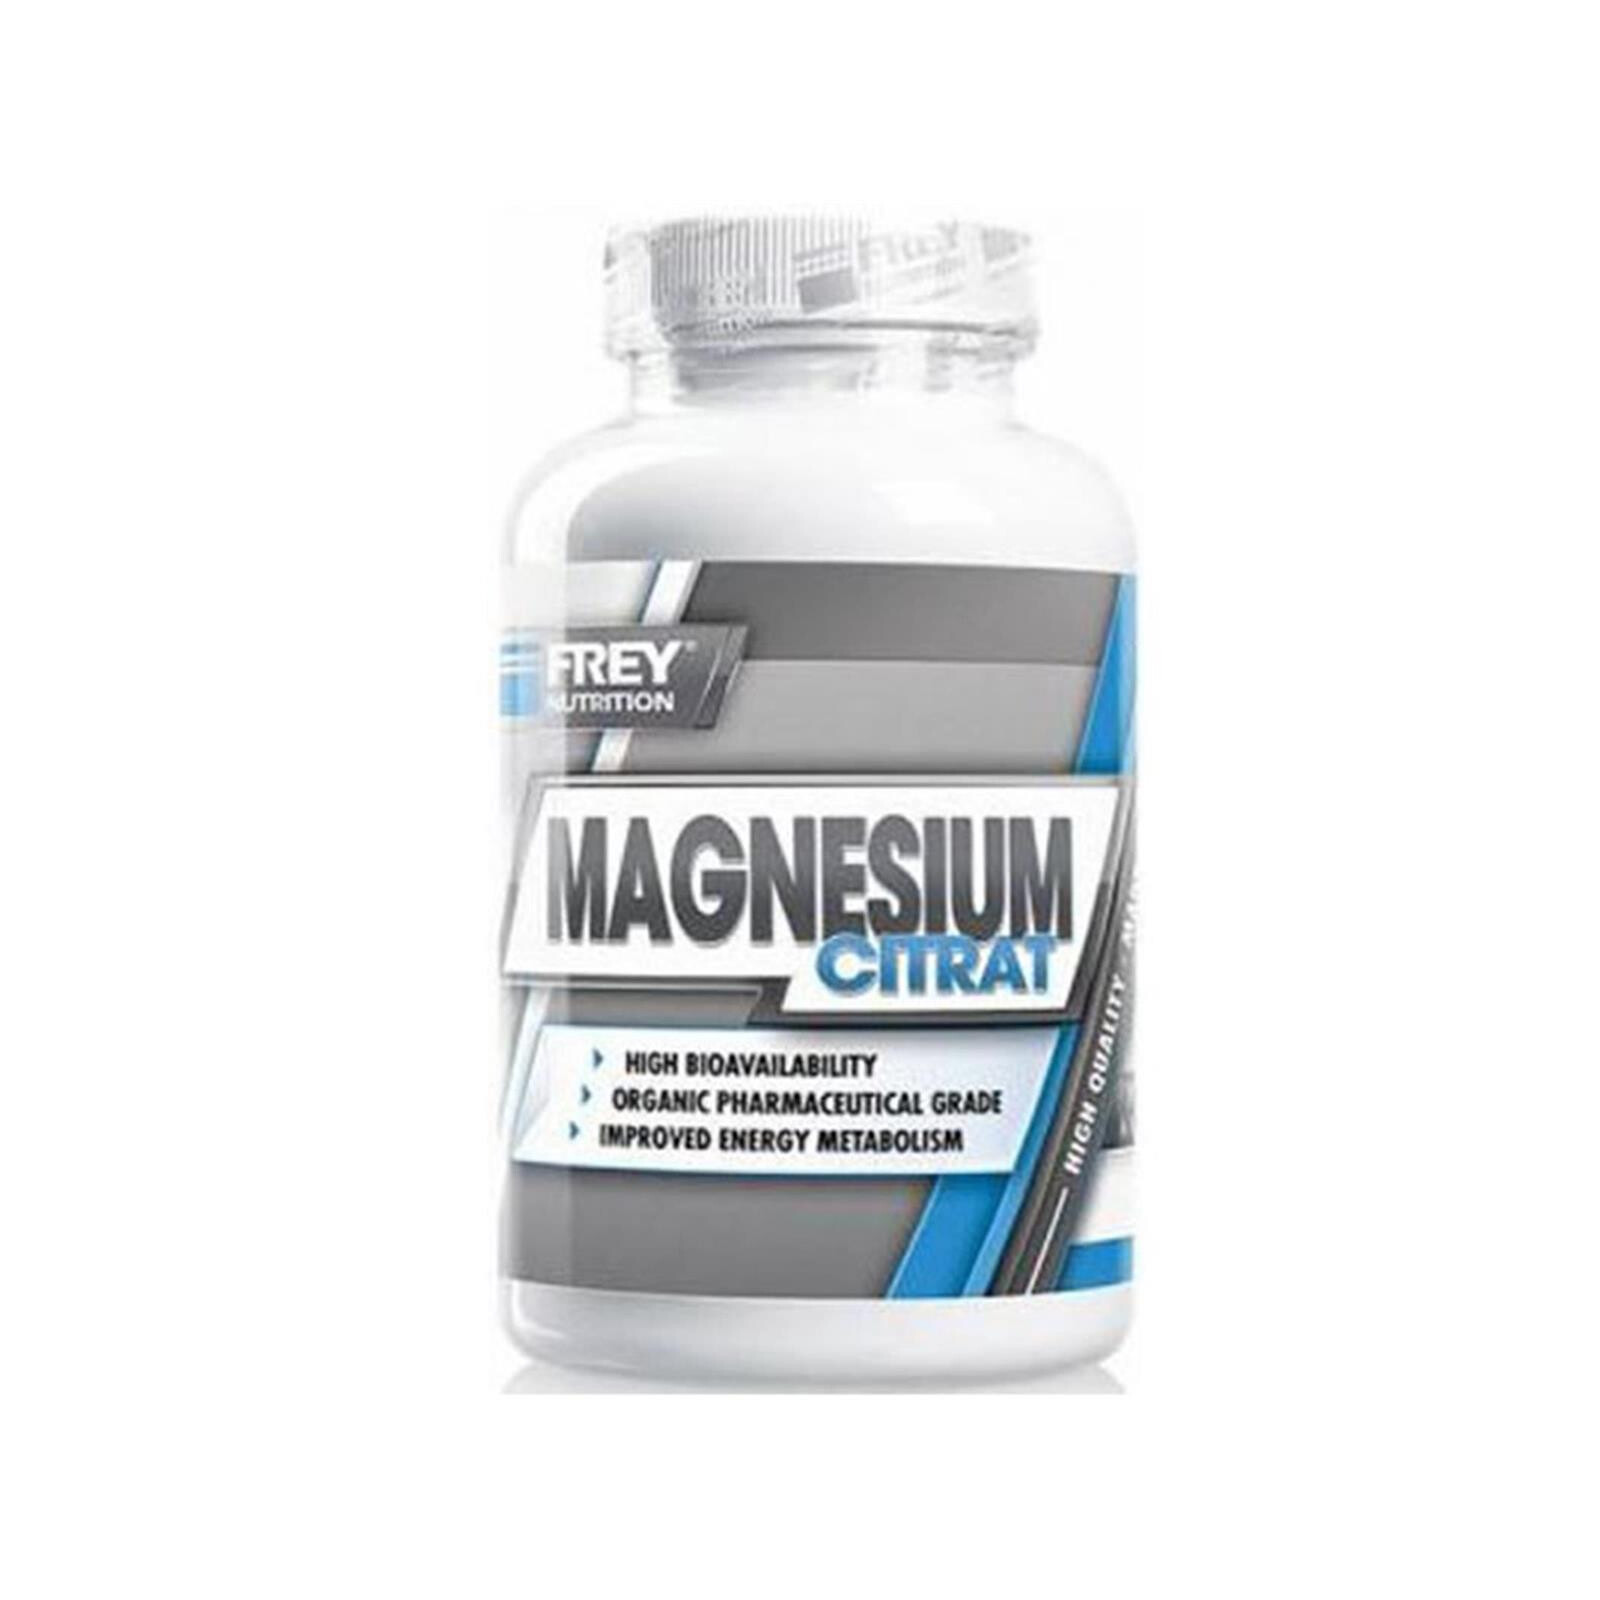 Frey Nutrition Magnesium Citrat, 120 Kapseln